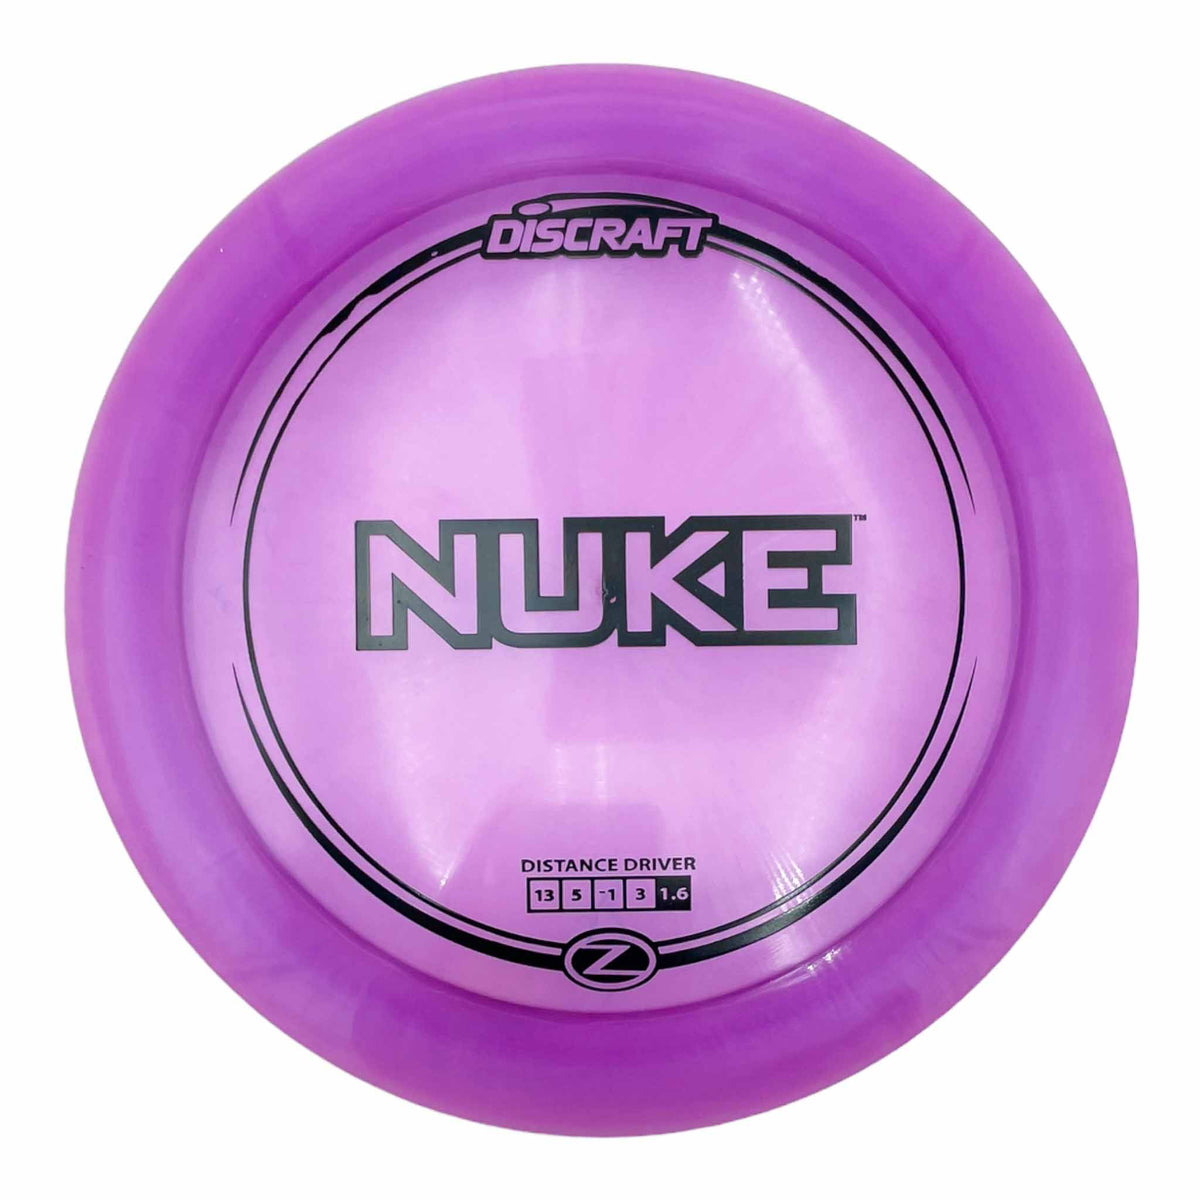 Discraft Z Line Nuke distance driver - Purple / Black